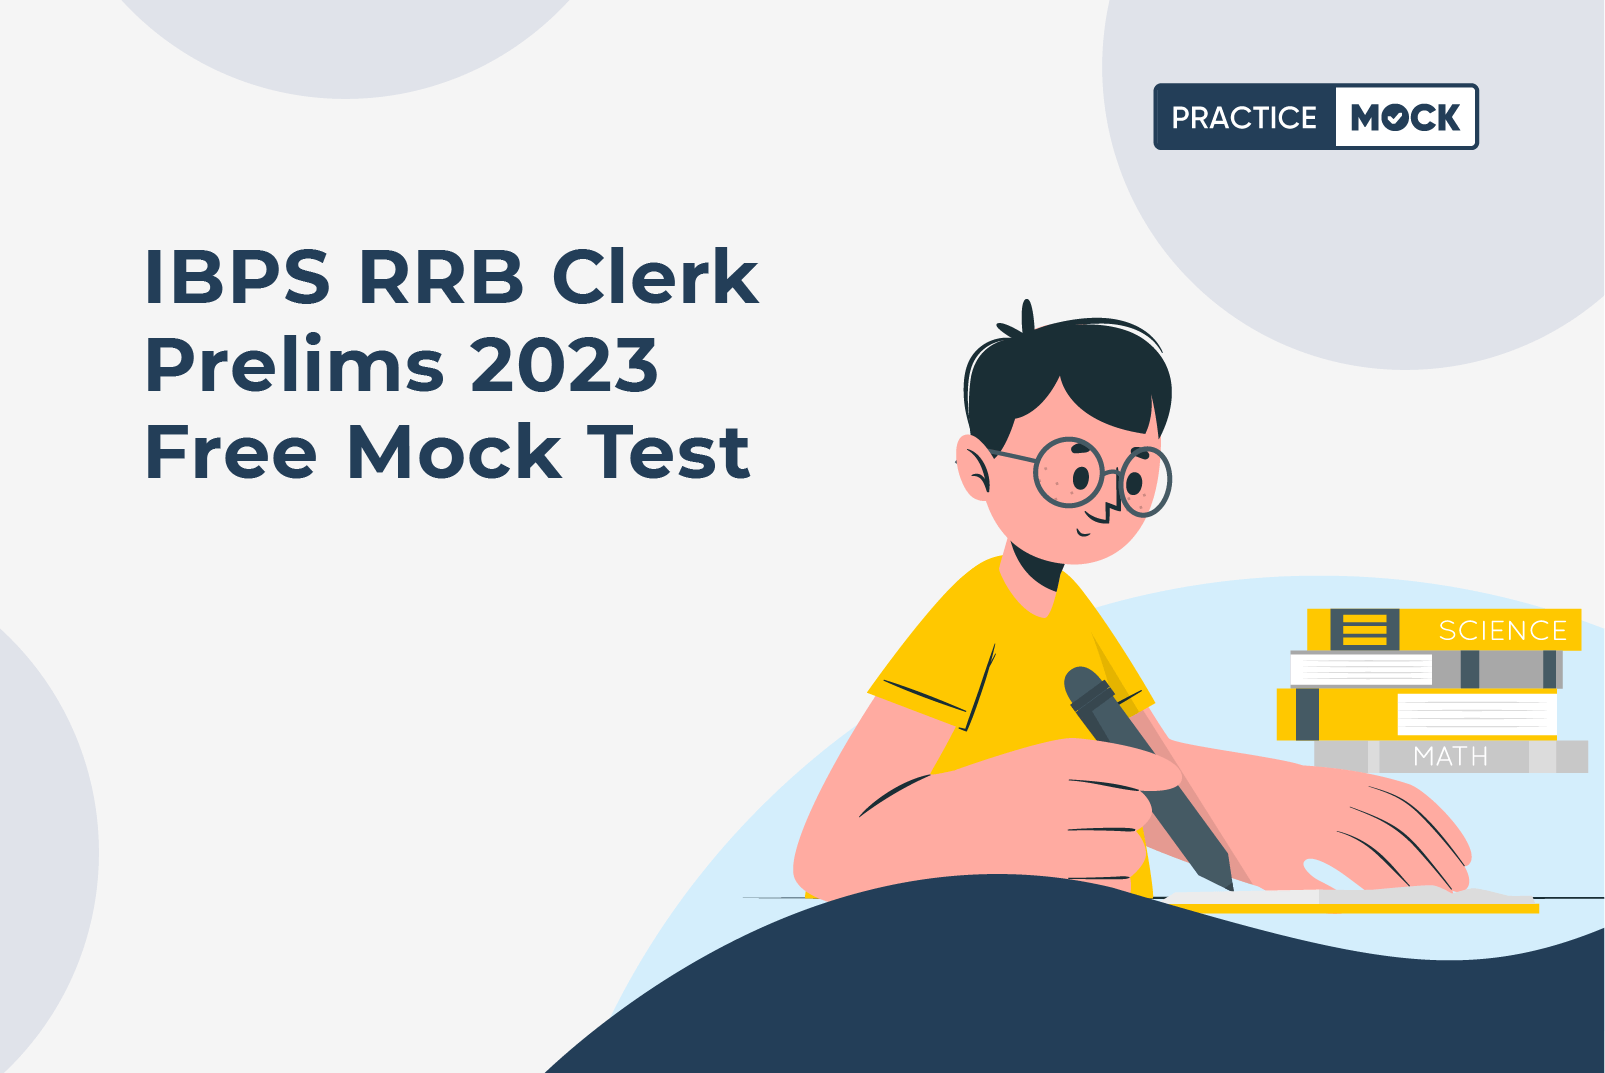 IBPS RRB Clerk Prelims 2023 Free Mock Test